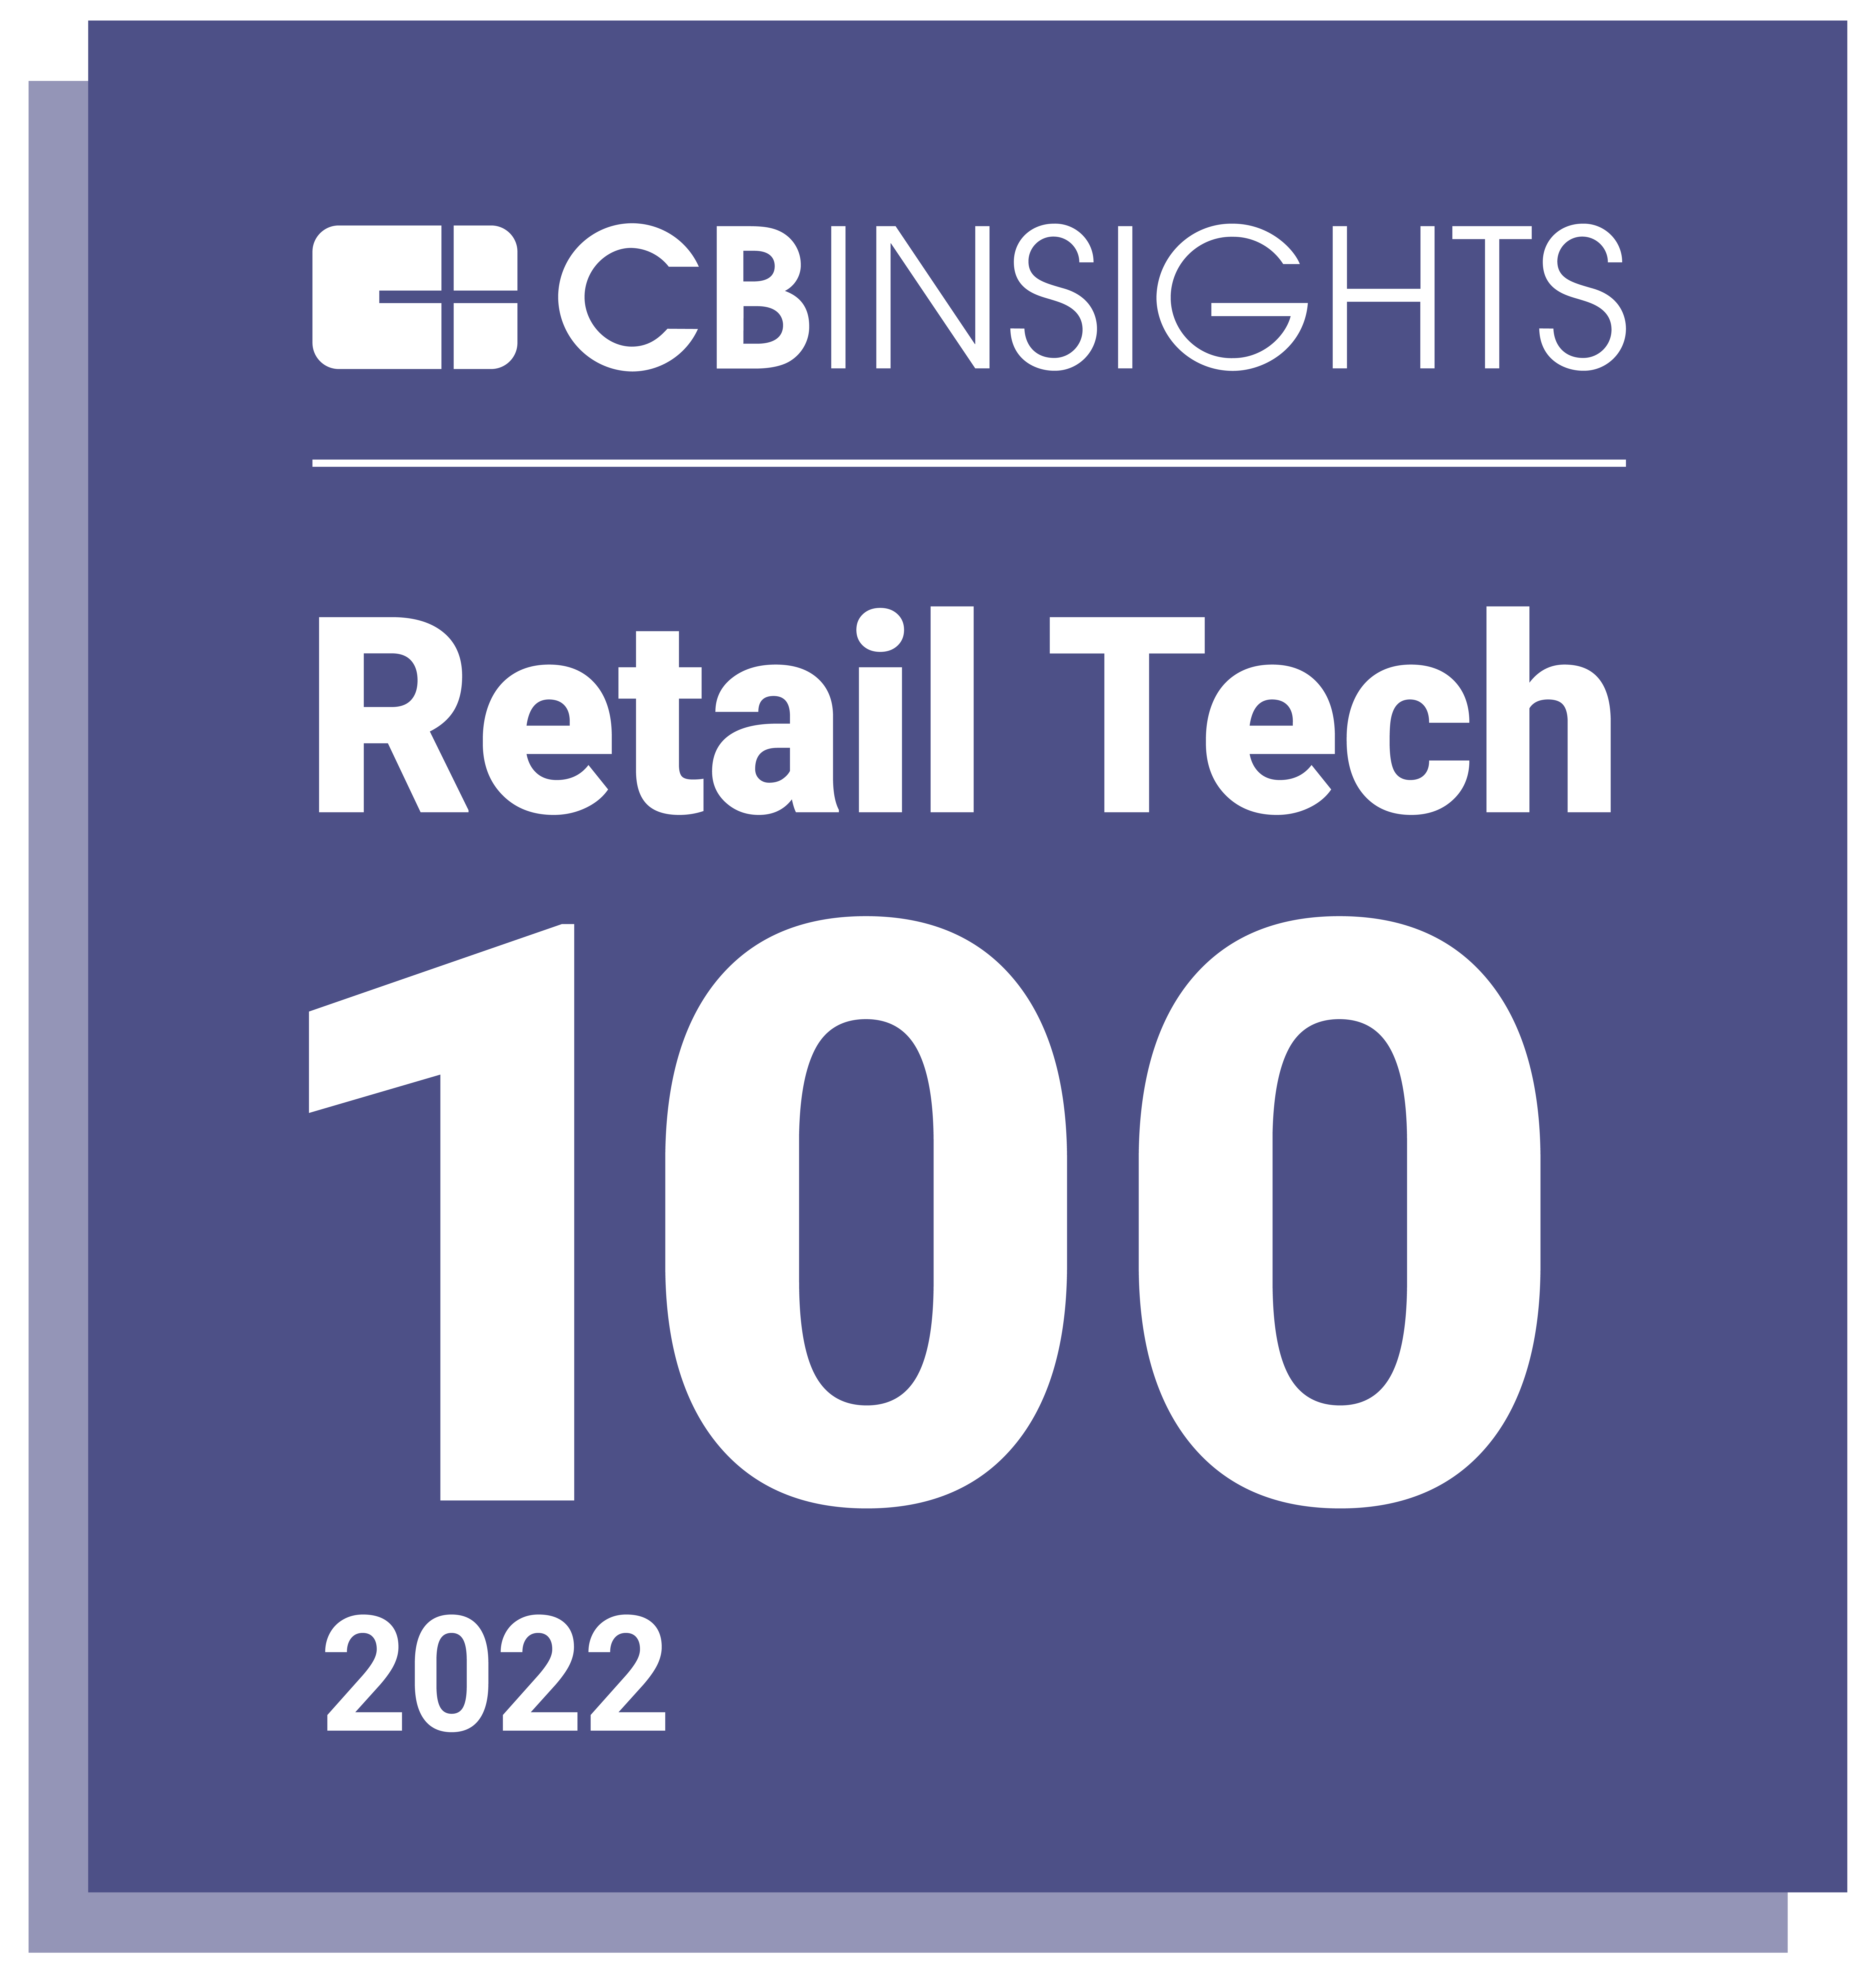 CB insight Retail Tech Badge